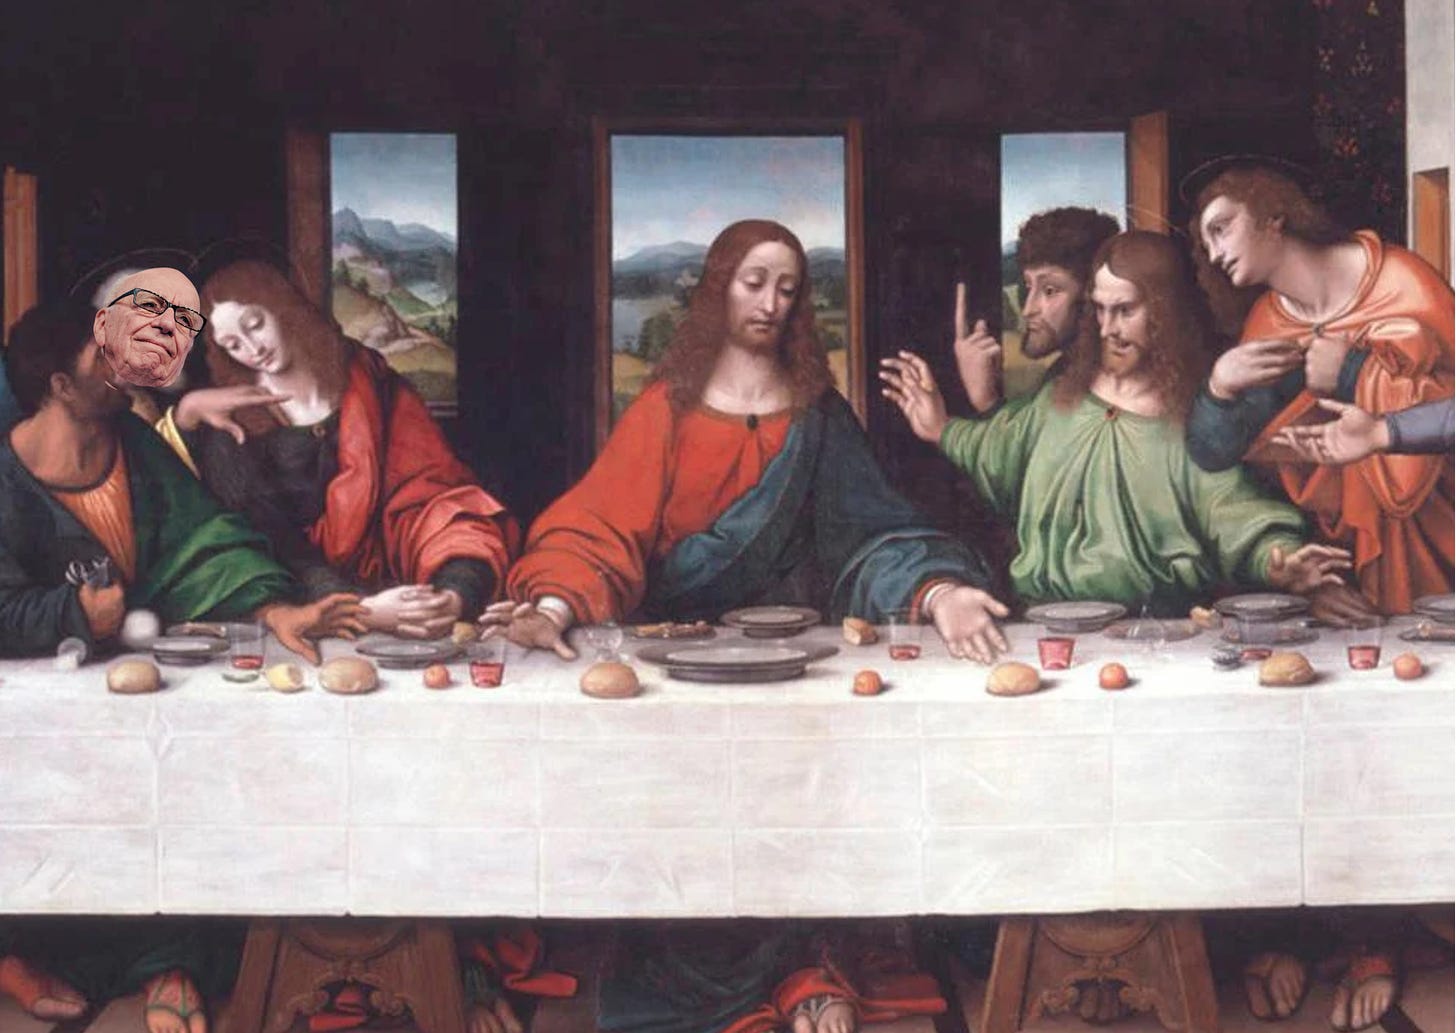 Last Supper, Rupert Murdoch as Judas